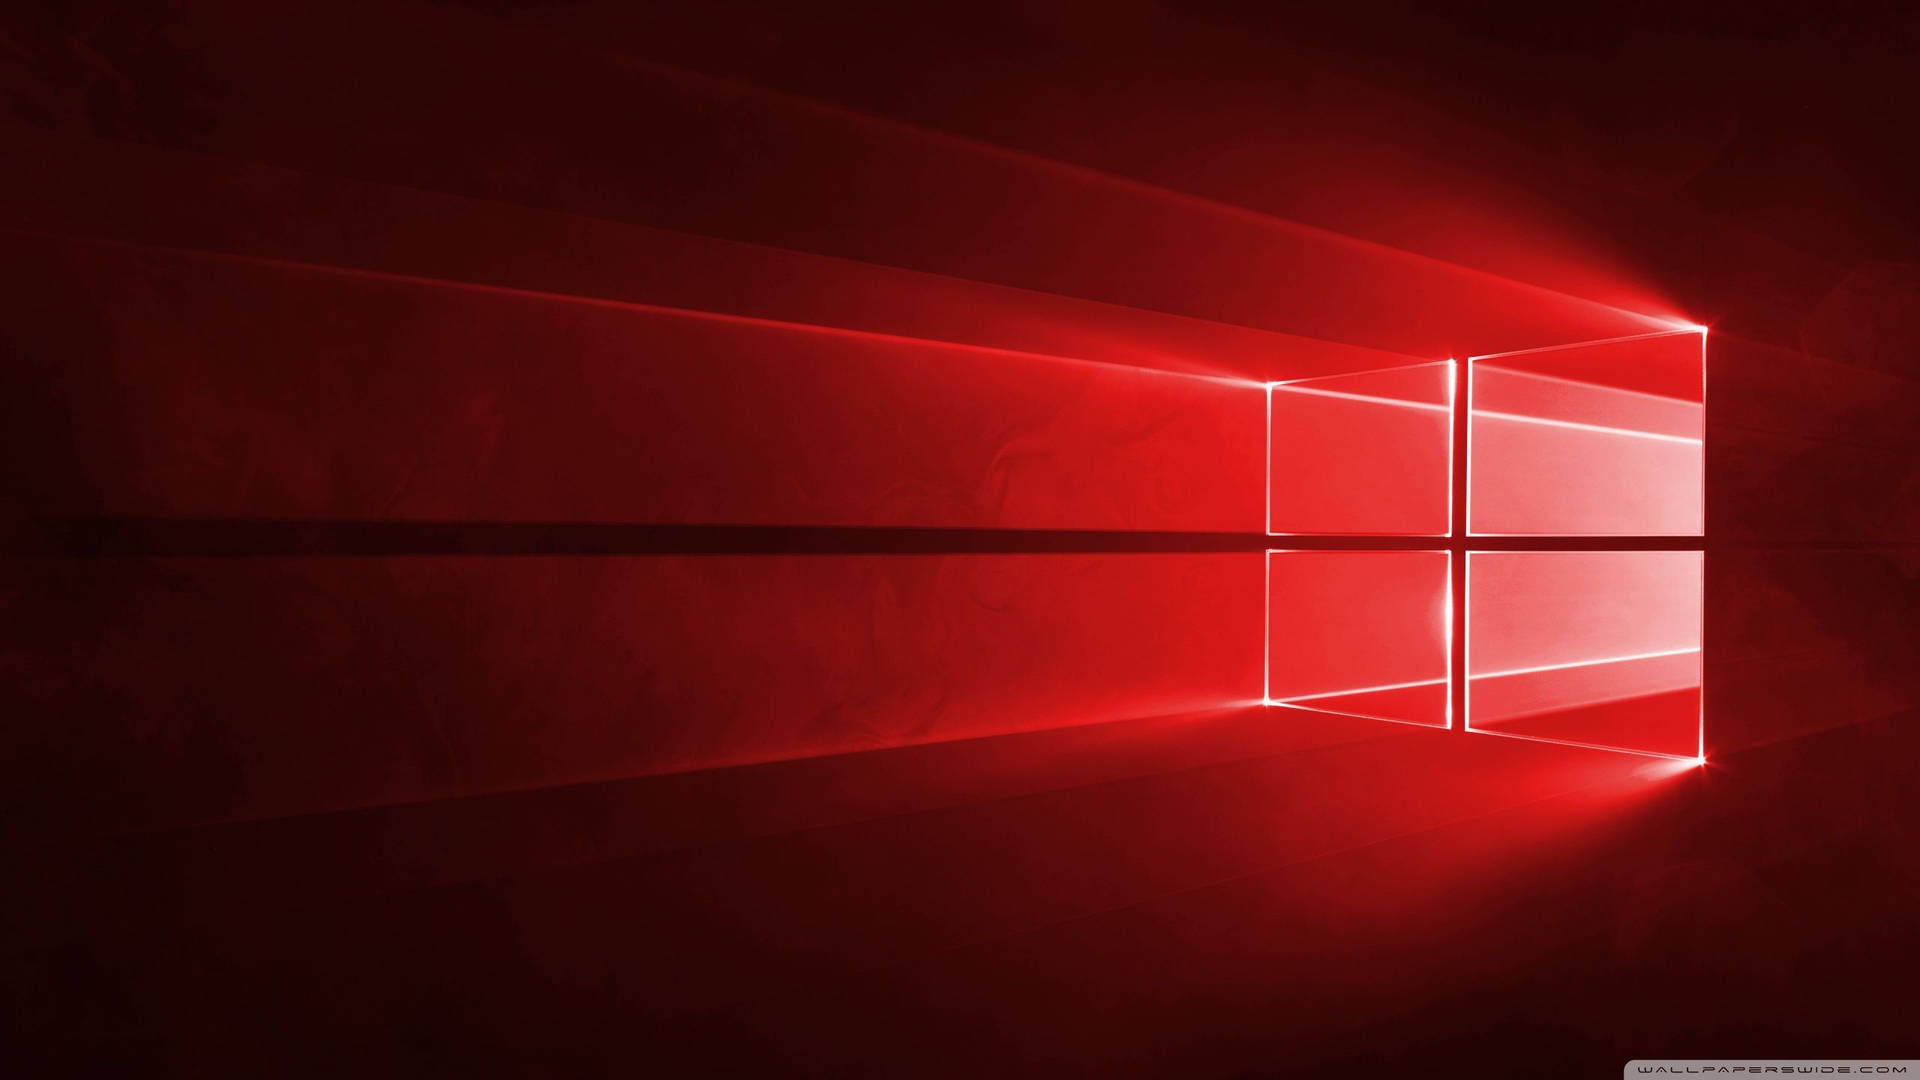 Windows10 Hd Rotes Licht-logo Wallpaper